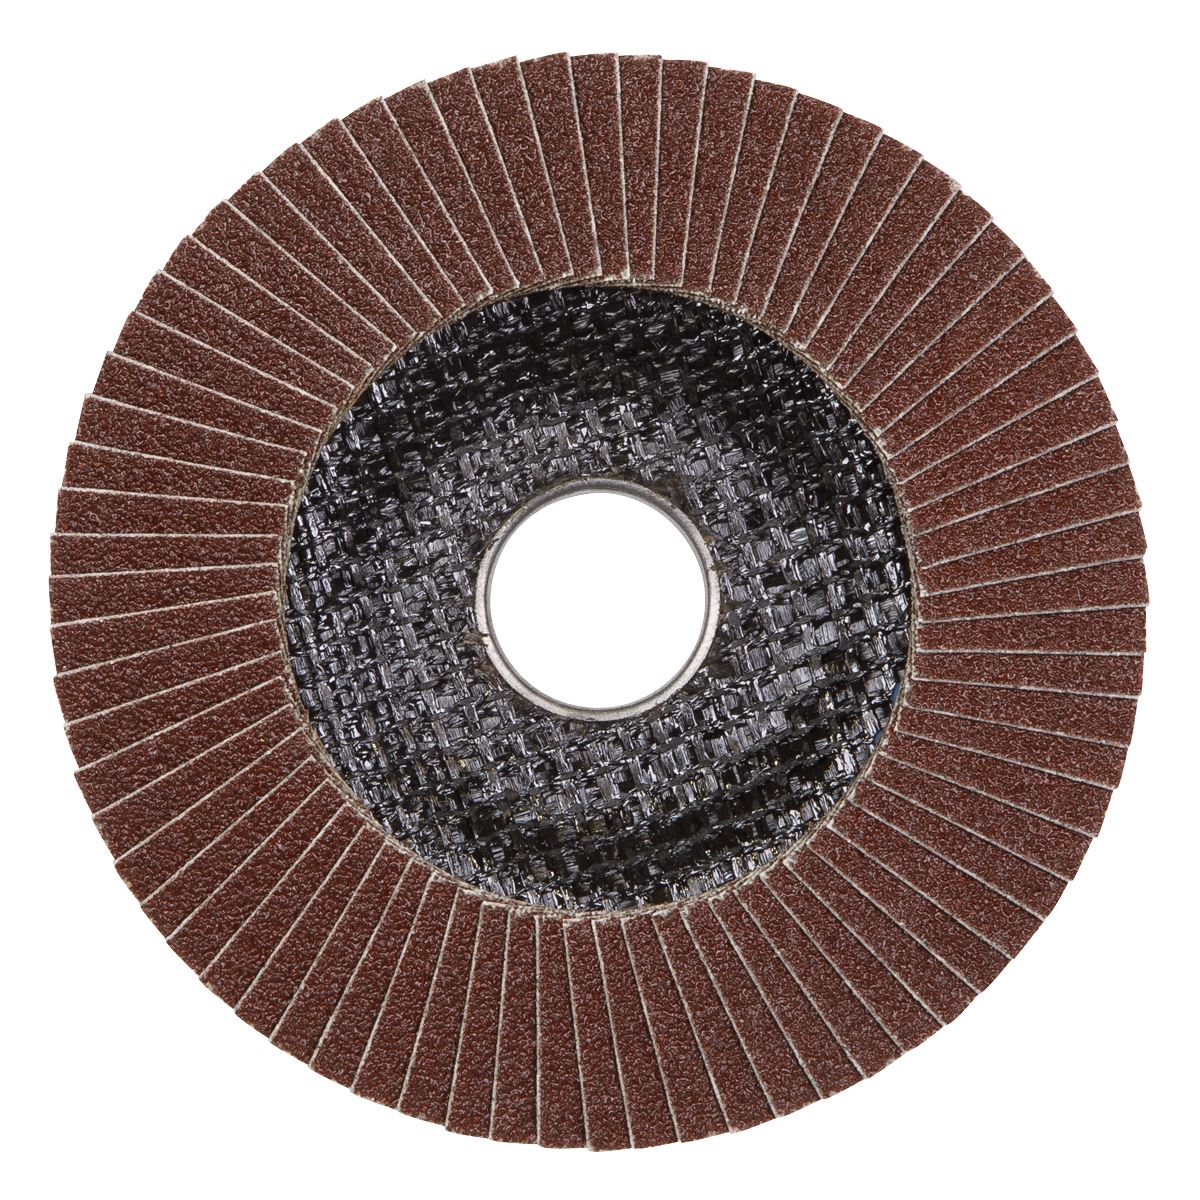 Sealey Flap Disc Aluminium Oxide Ø125mm Ø22mm Bore 60Grit